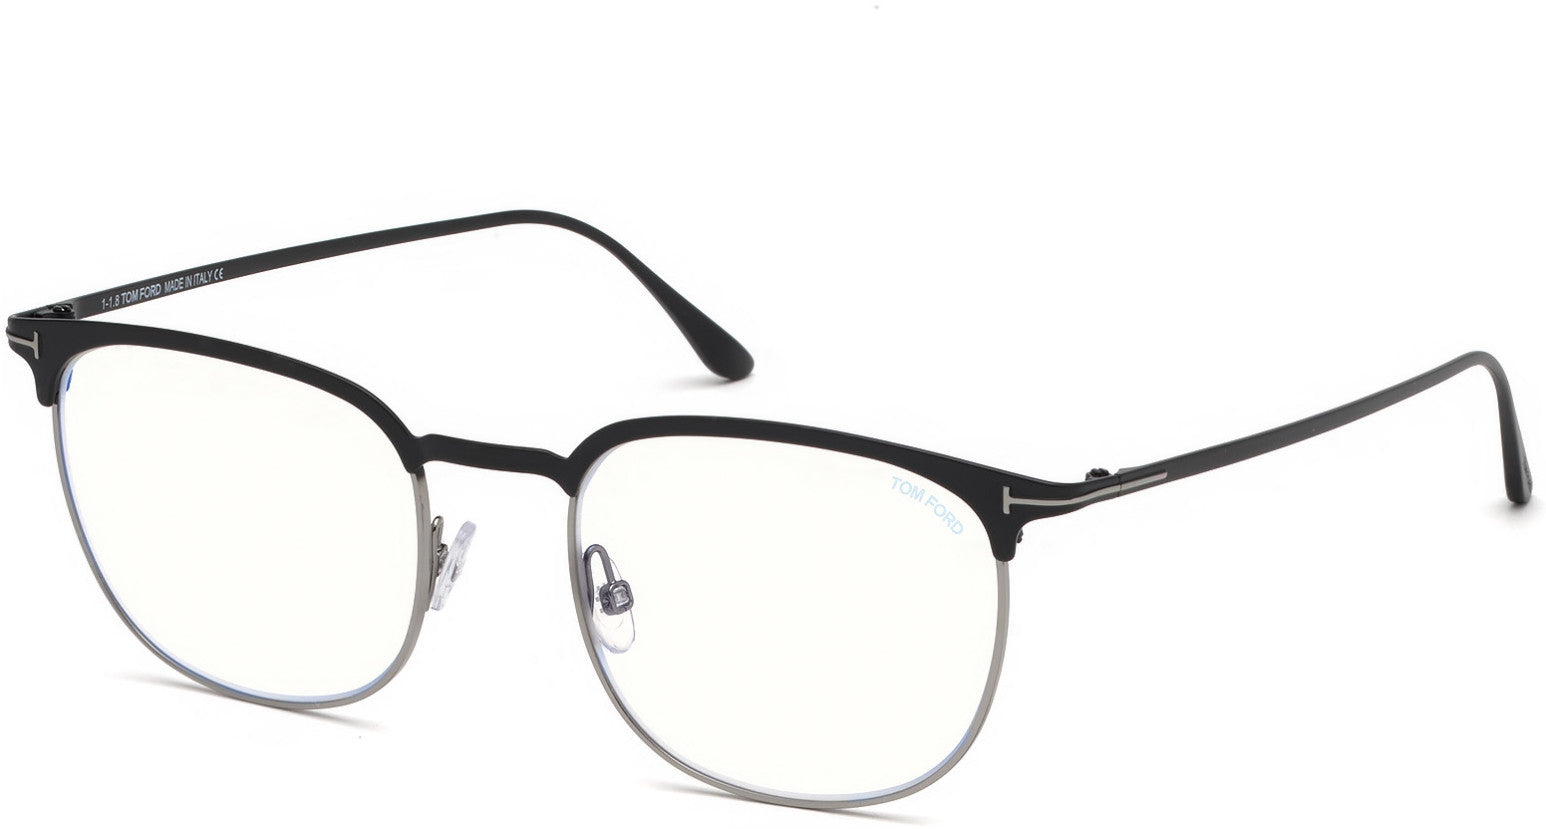 Tom Ford FT5549-B Geometric Eyeglasses 005-005 - Matte Black Enamel, Shiny Light Ruthenium / Blue Block Lenses